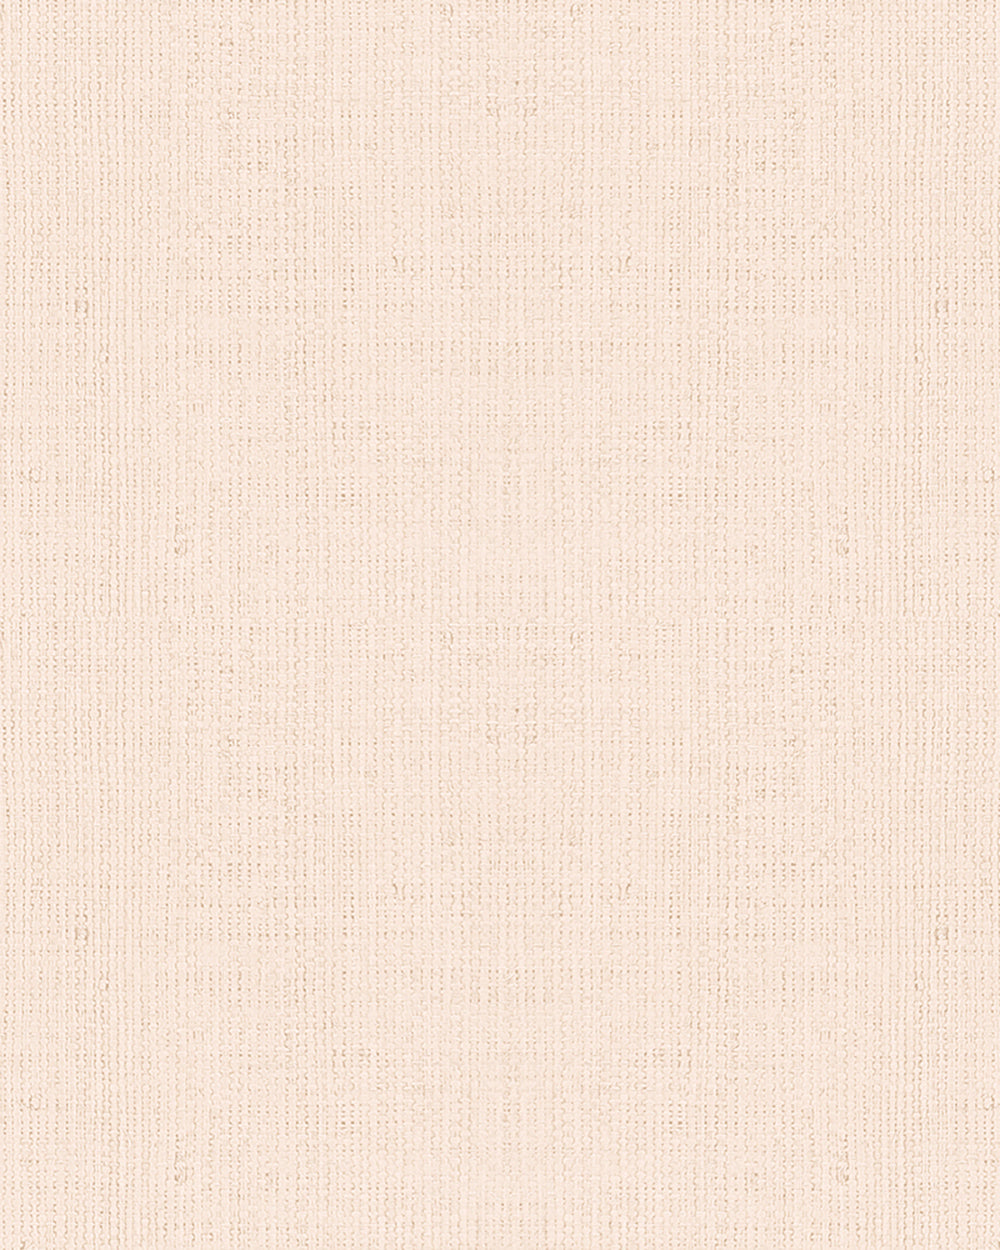 Casual - Textured Rattan Plains plain wallpaper Marburg Roll Light Beige  30456